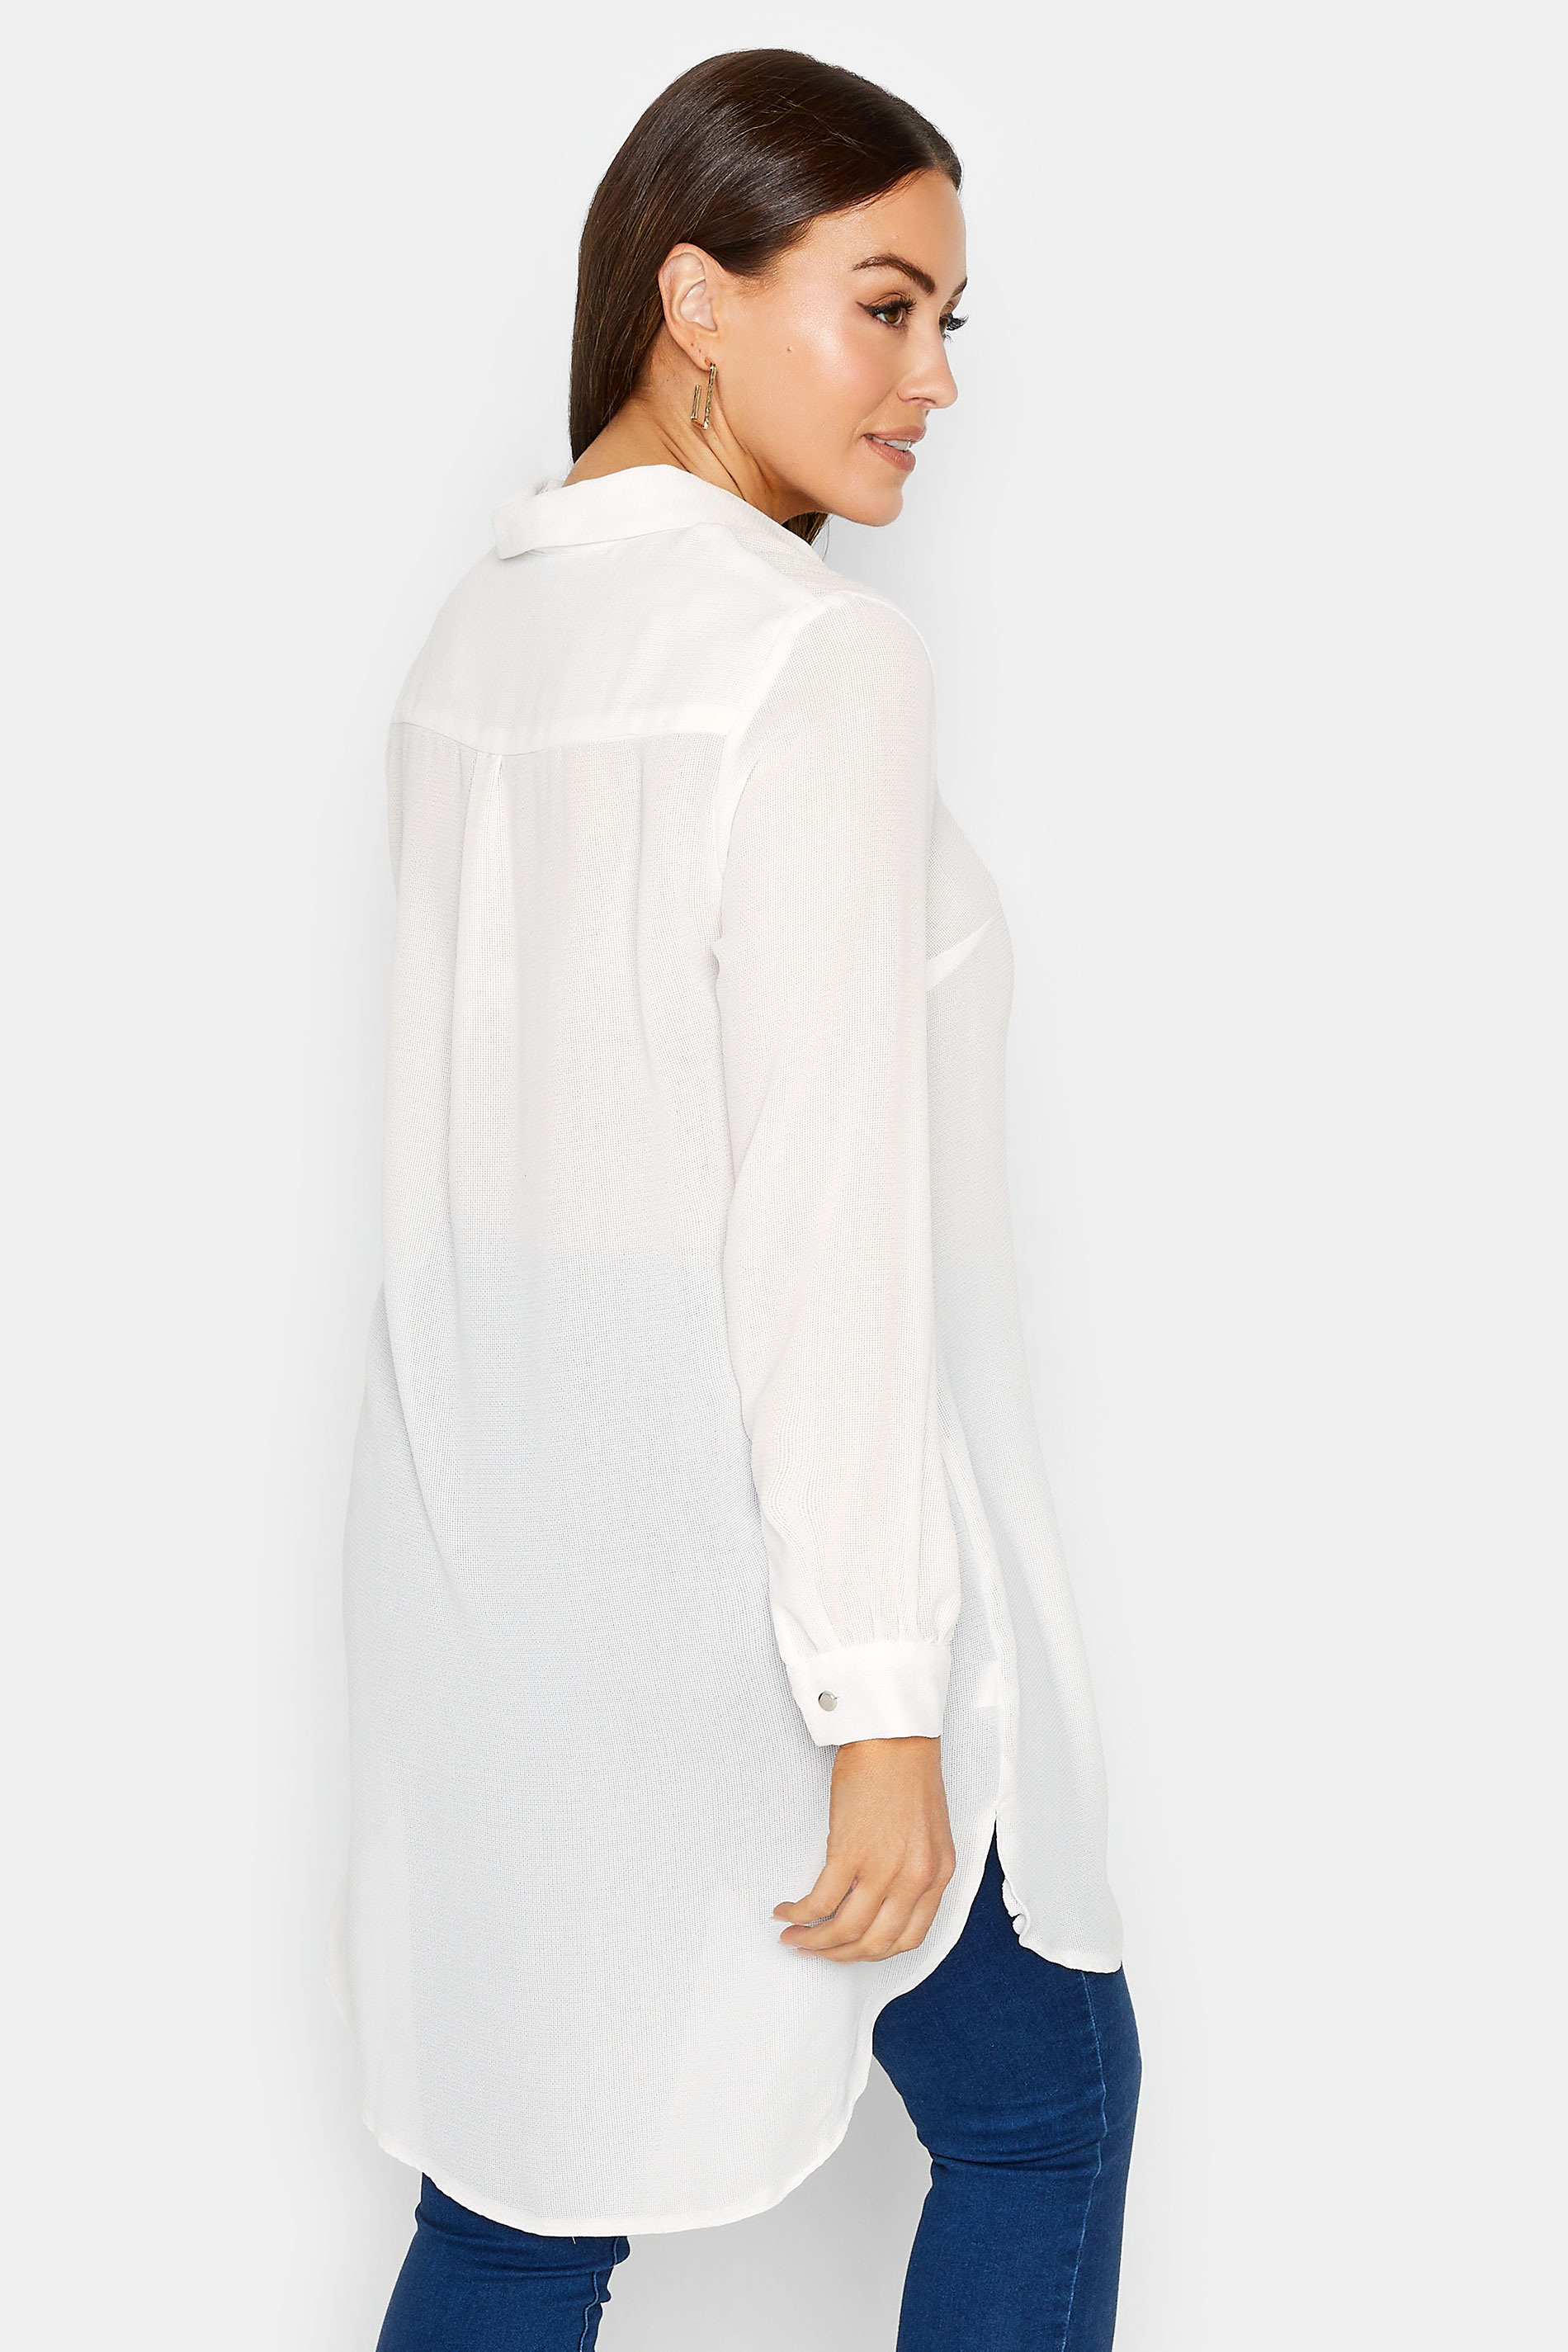 M&Co White Dipped Hem Shirt | M&Co 3